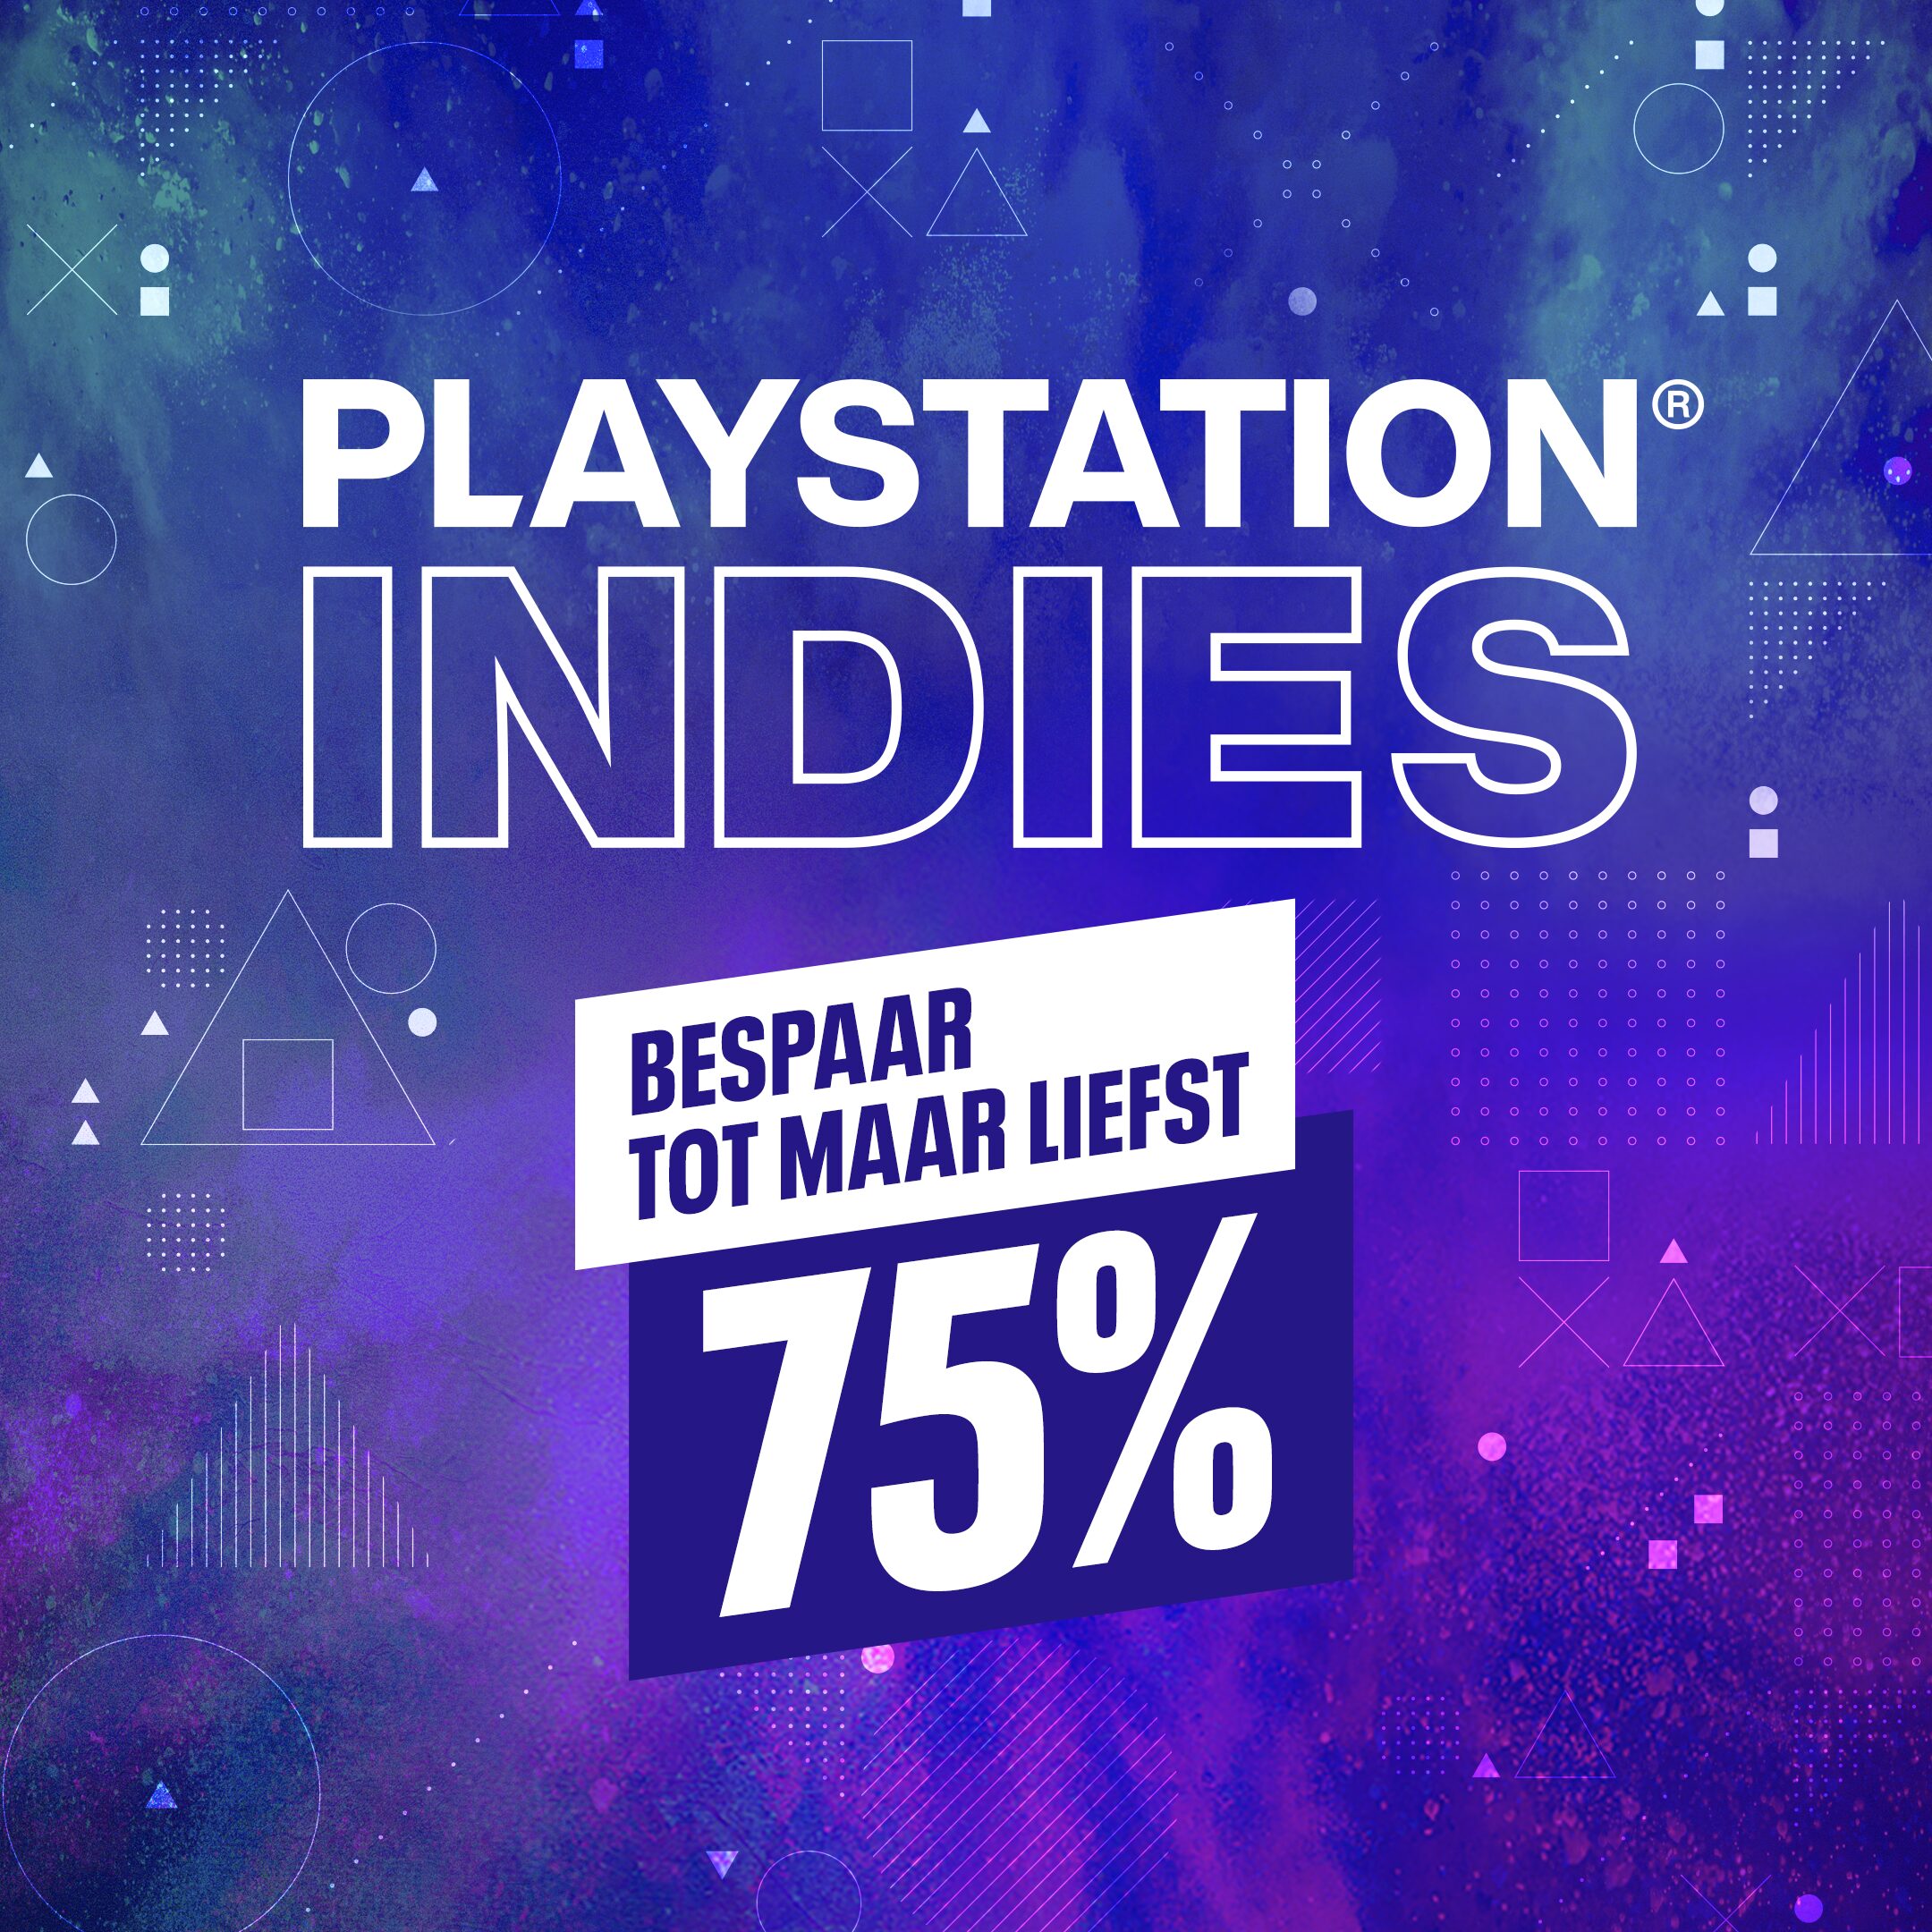 [PROMO] PlayStation Indies - TD